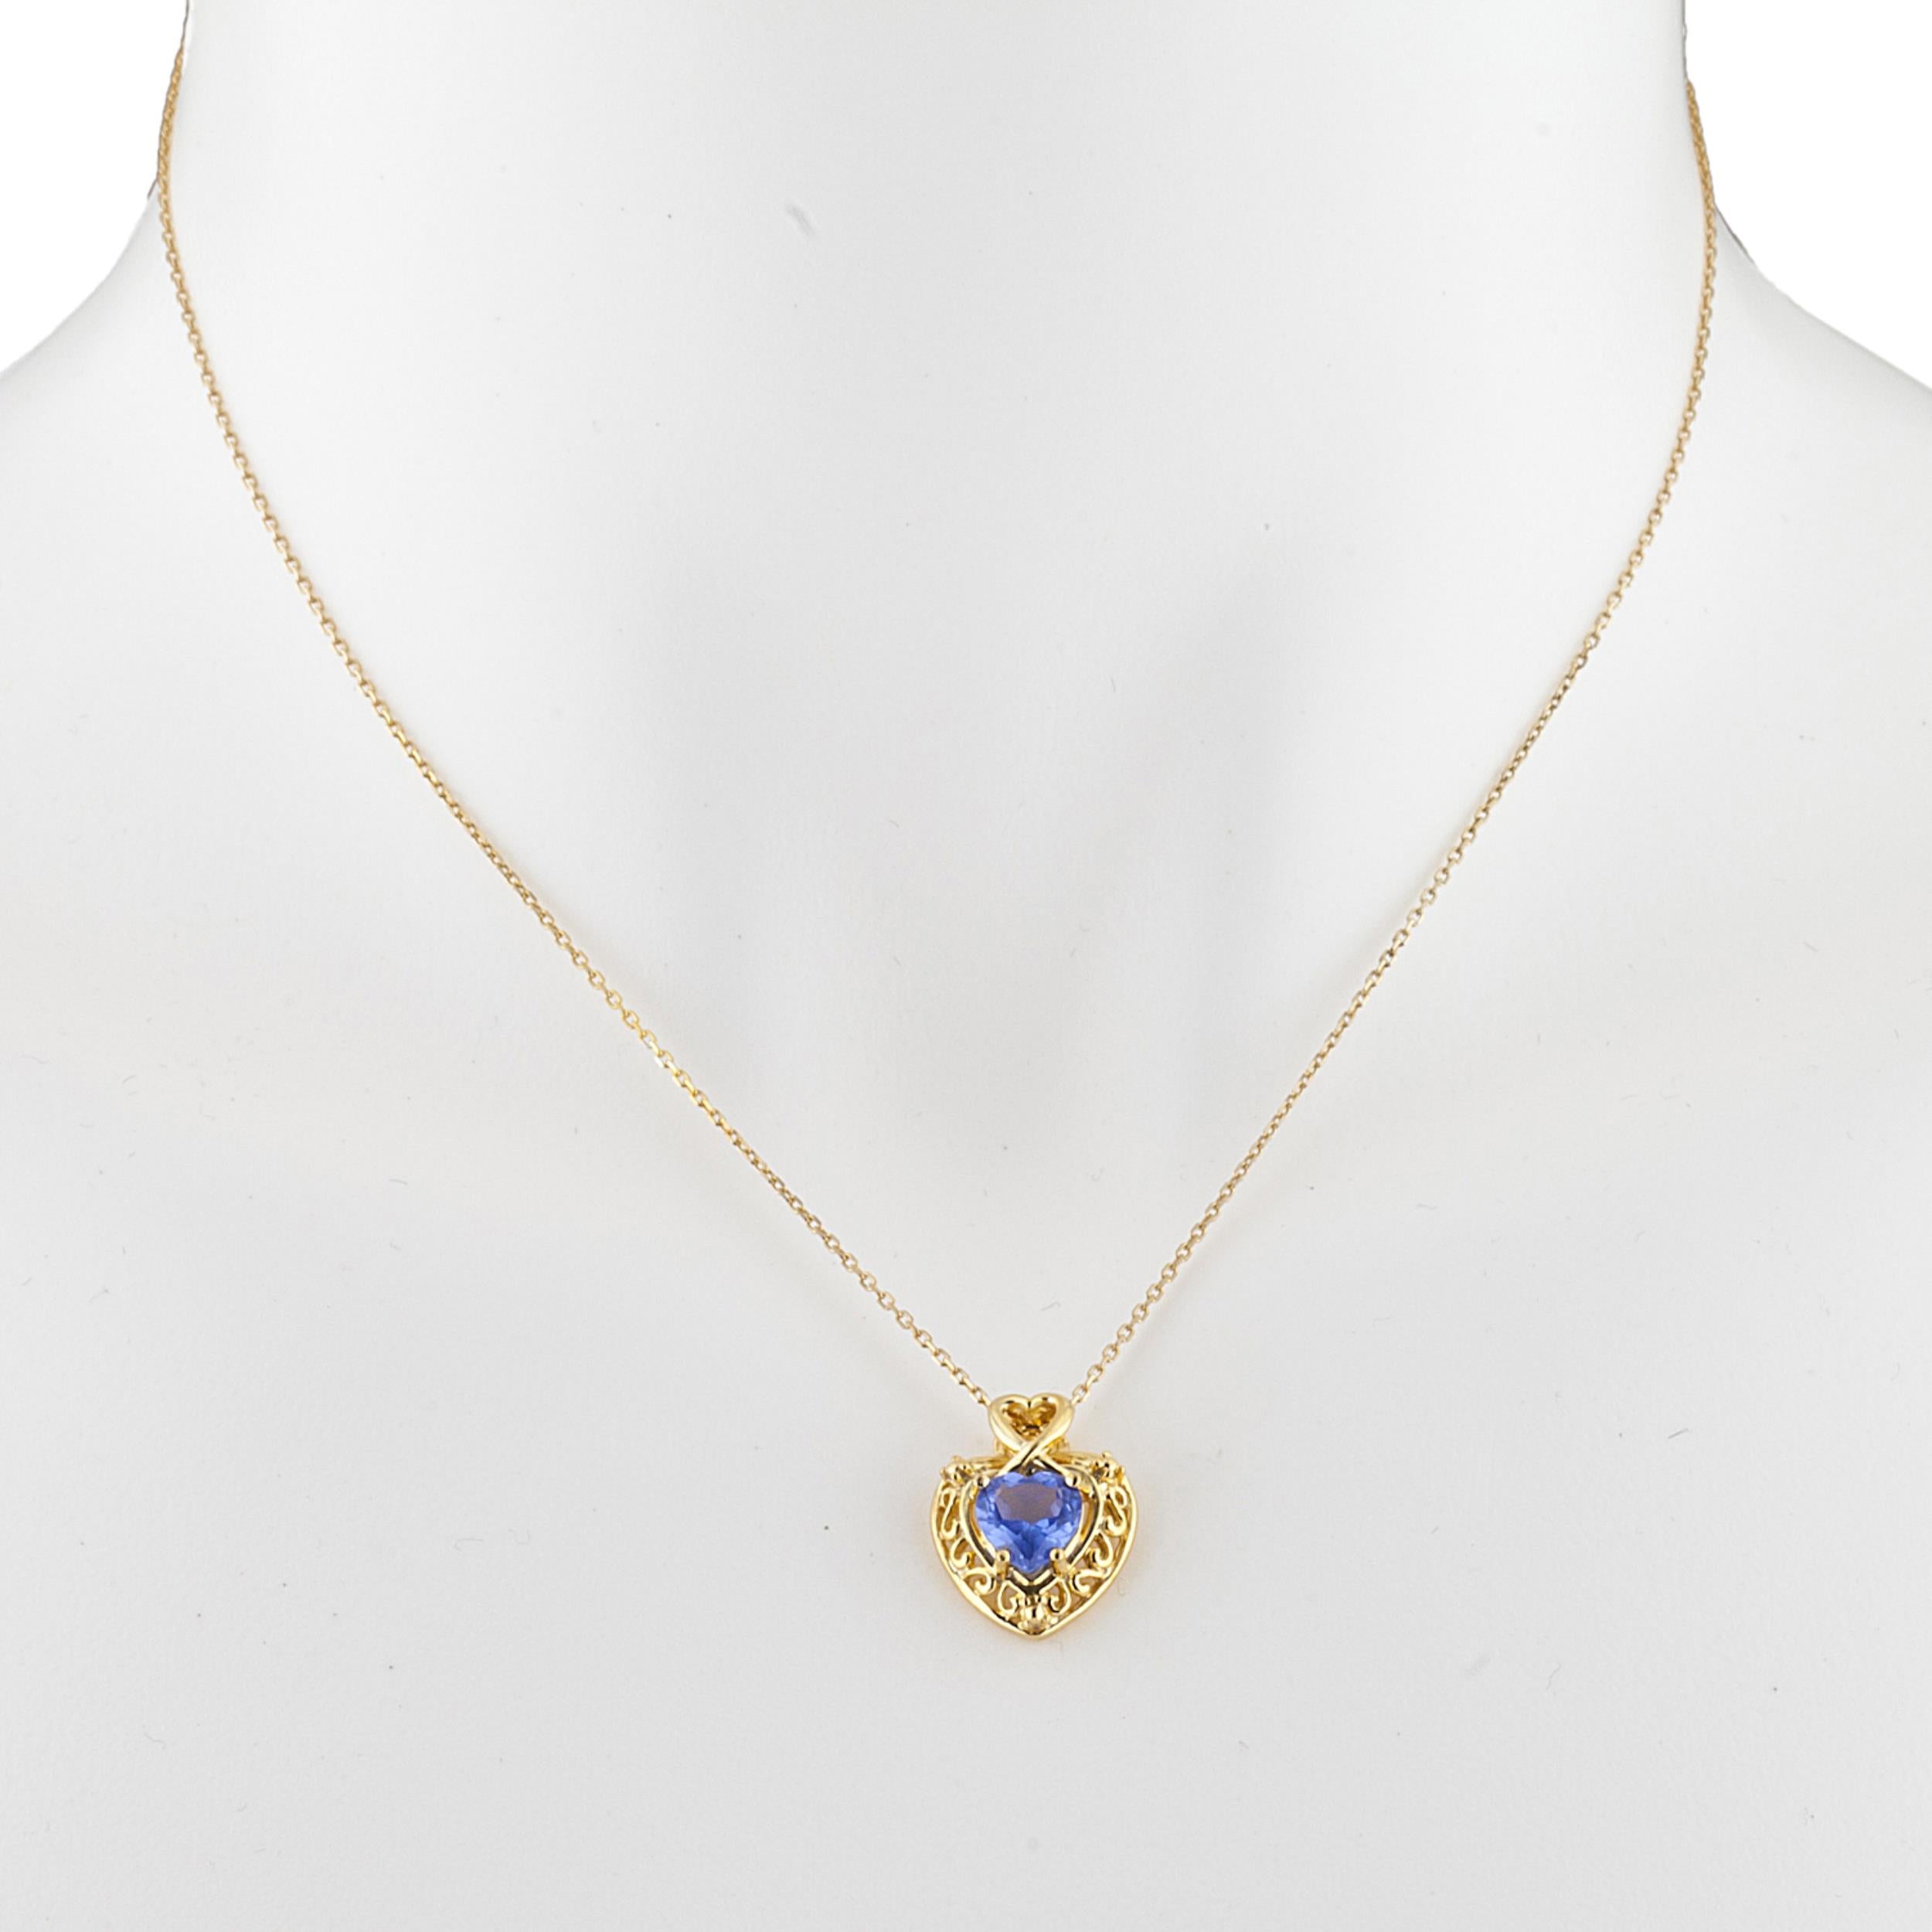 14Kt Gold Tanzanite Heart Design Pendant Necklace